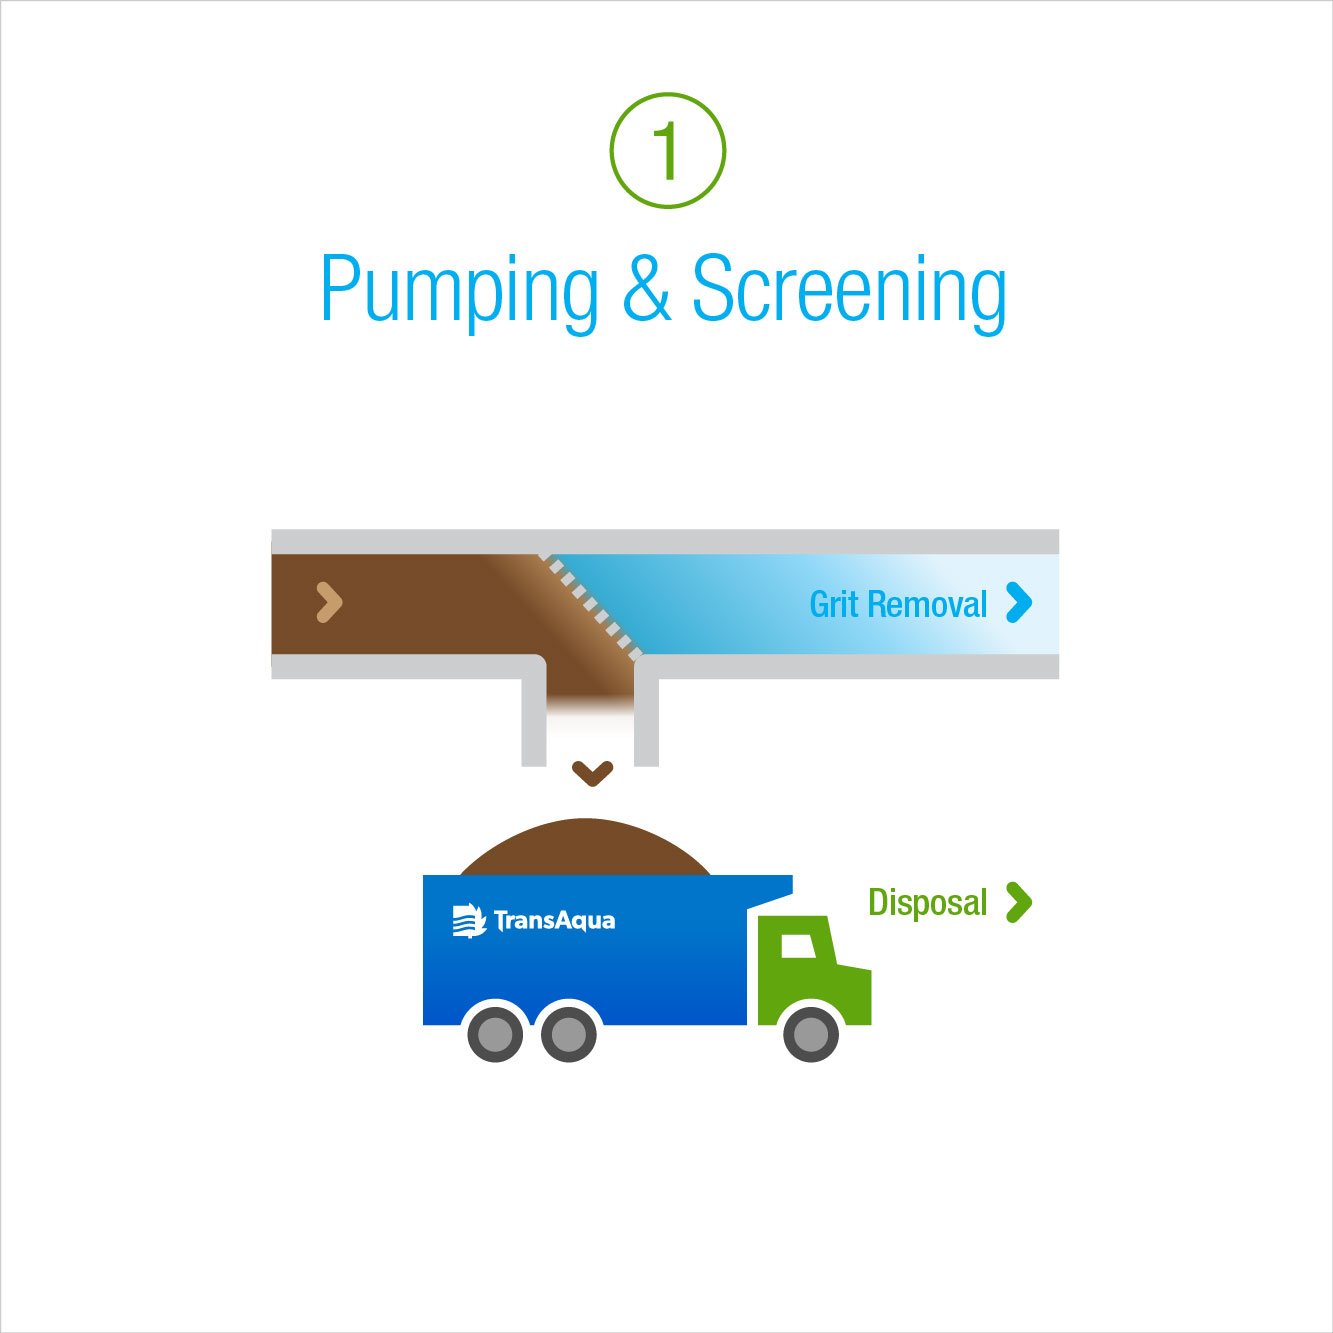 1: Pumping & Screening